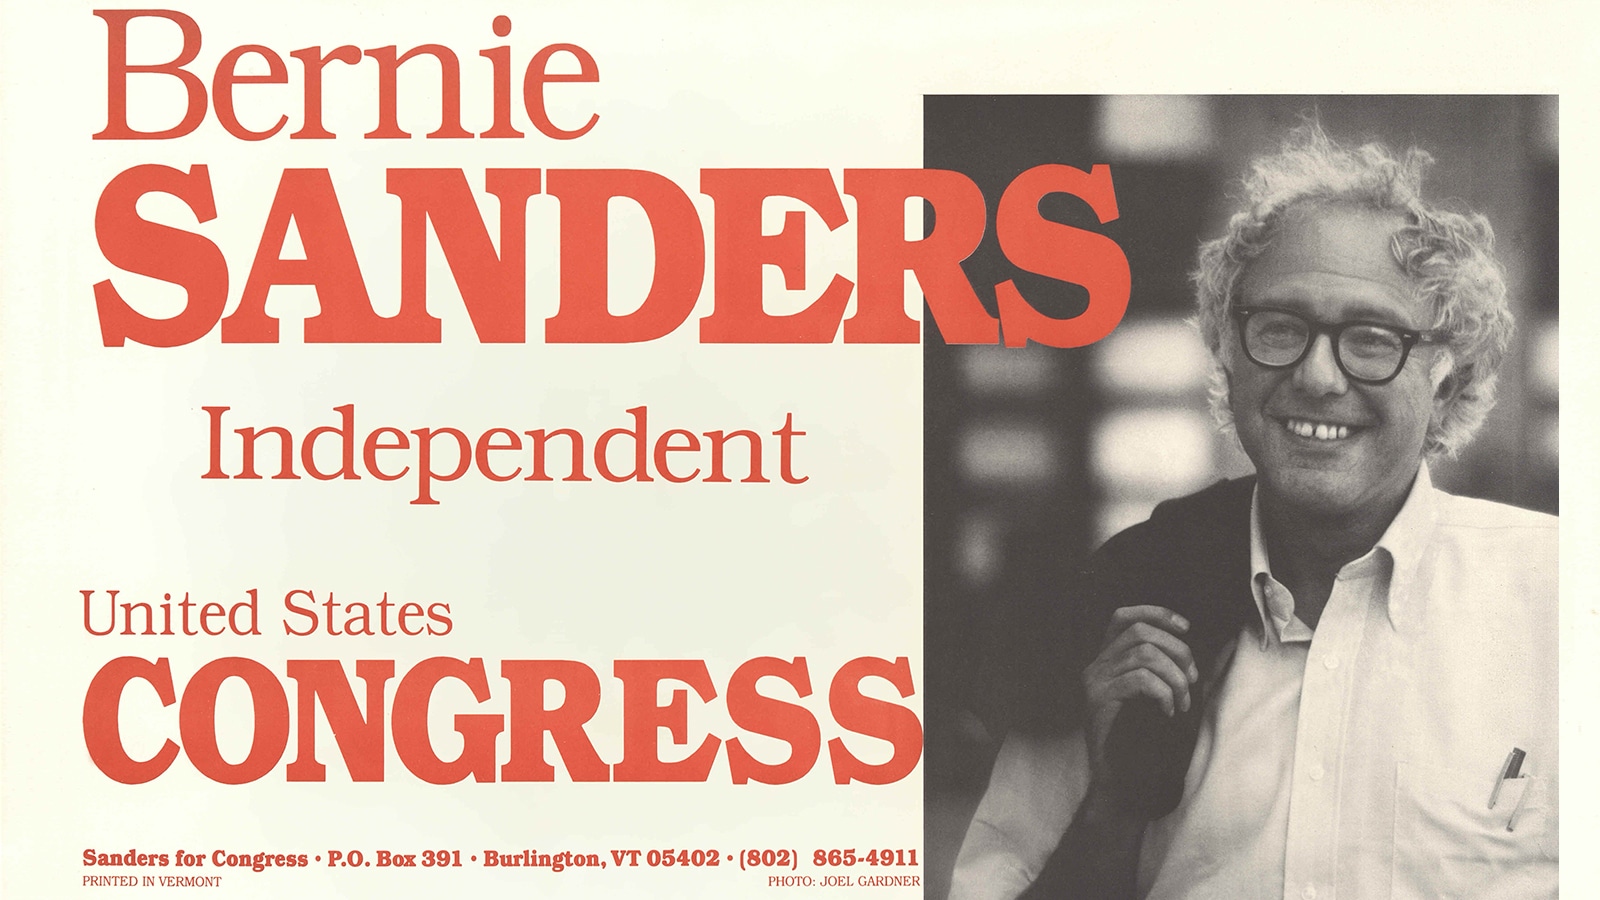 Bernie Sanders 1988 U.S. House Of Representatives Campaign